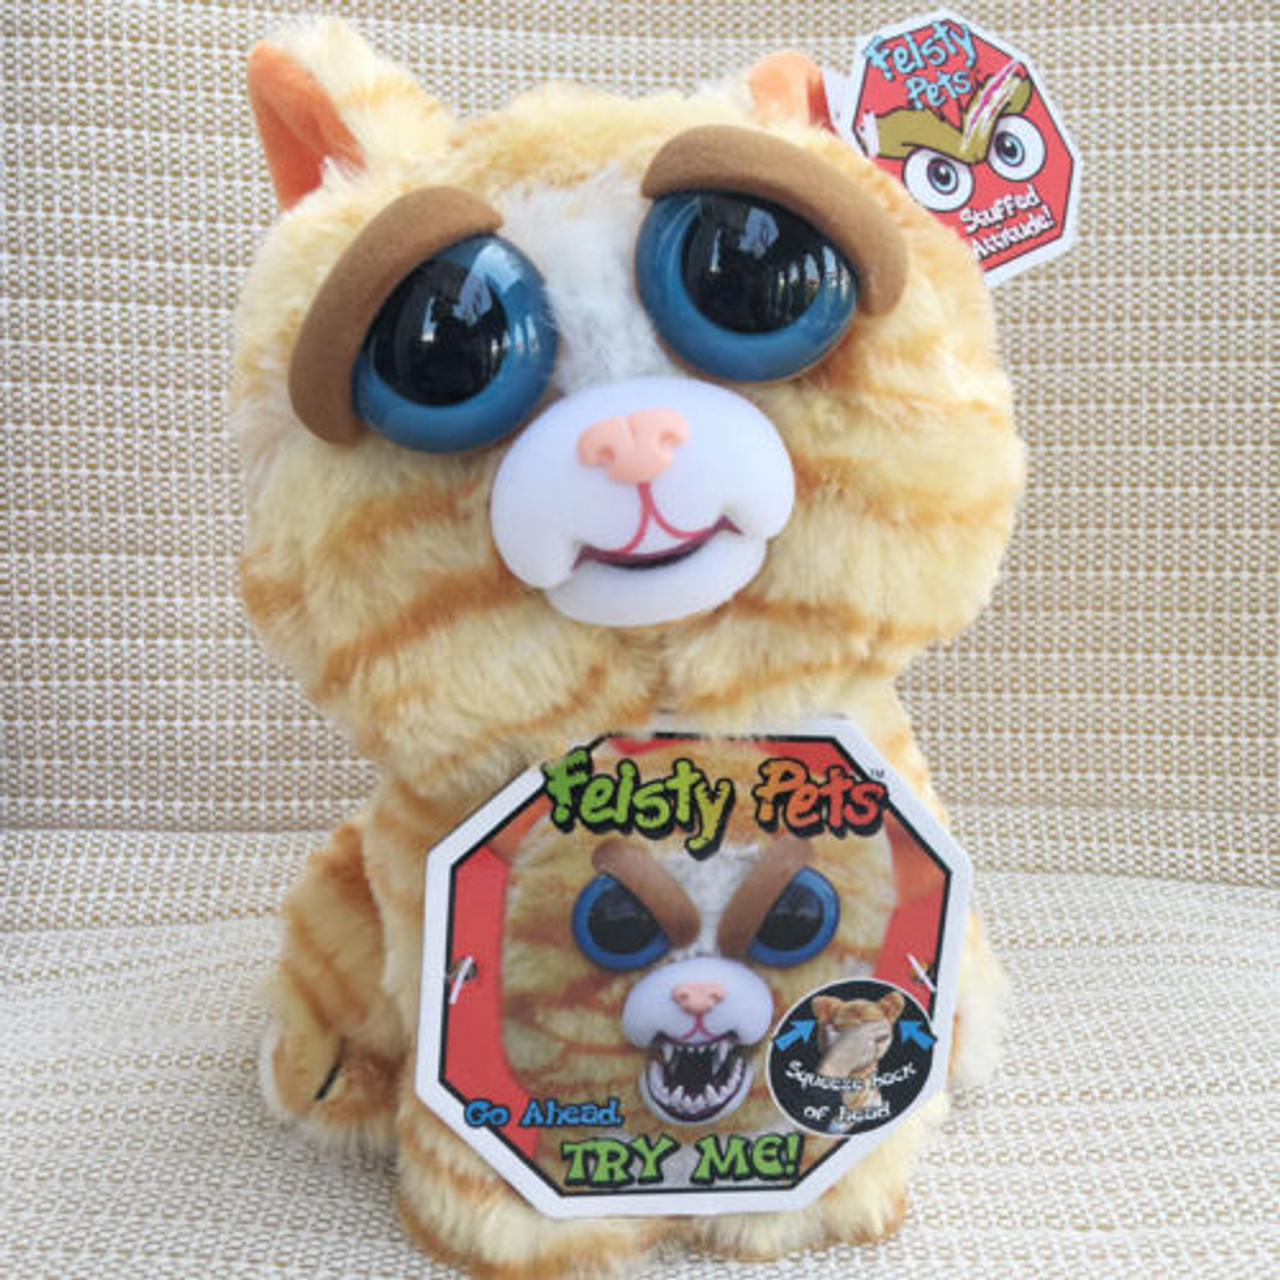 Feisty Toy Adorable Plush Stuffed Feisty Animal Unicorn Attituded Christmas Gift